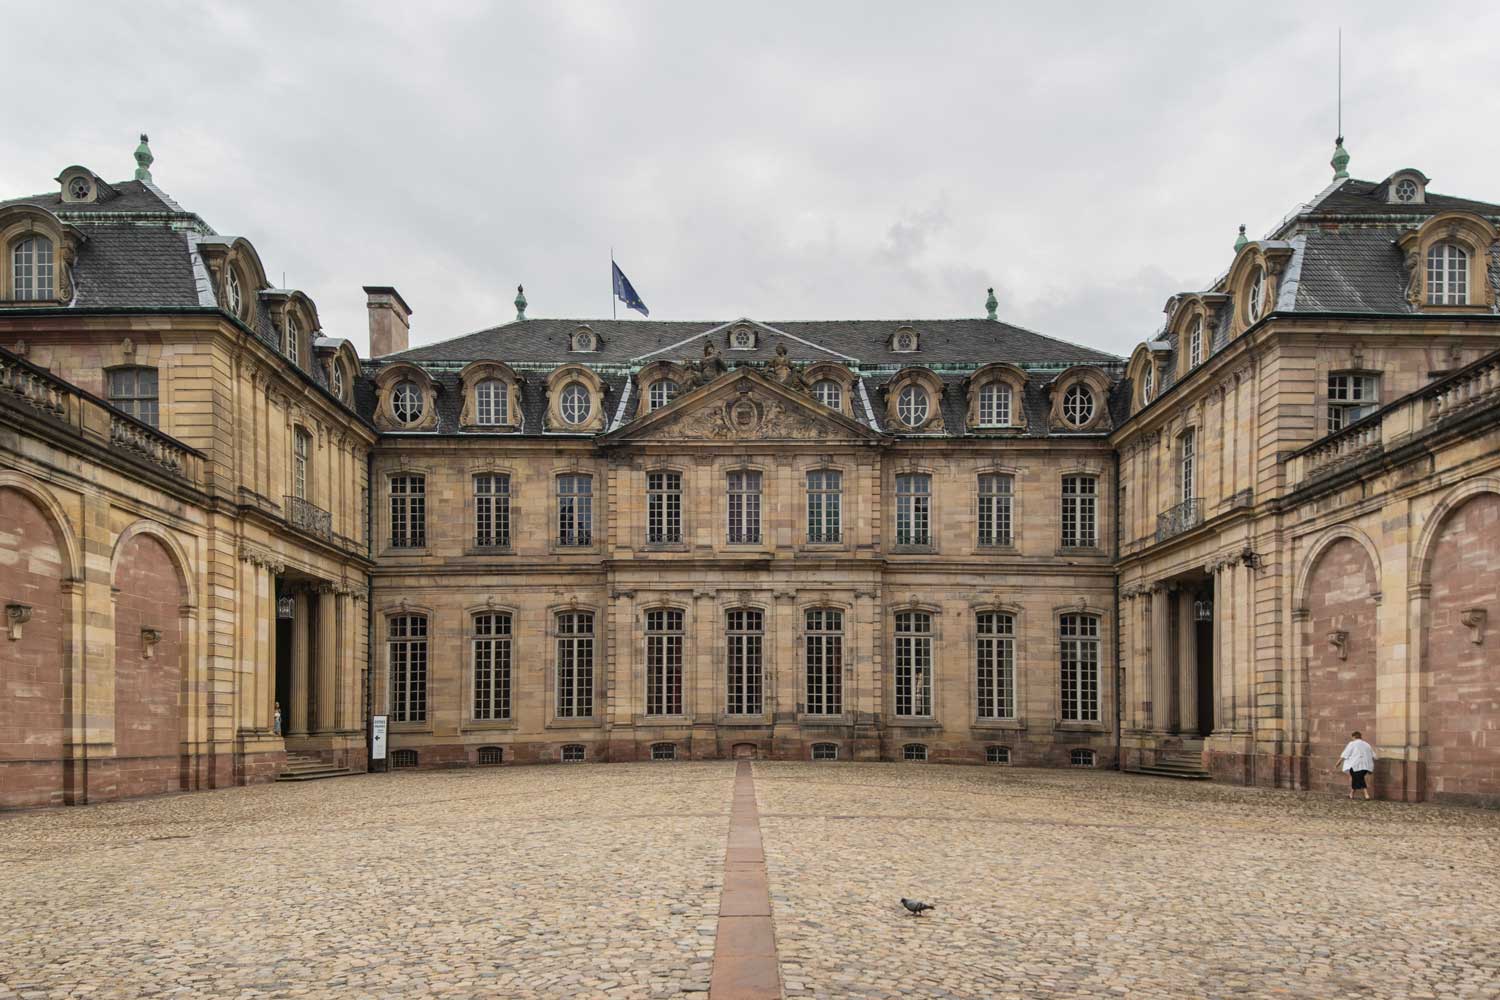 The Palais Rohan courtyard